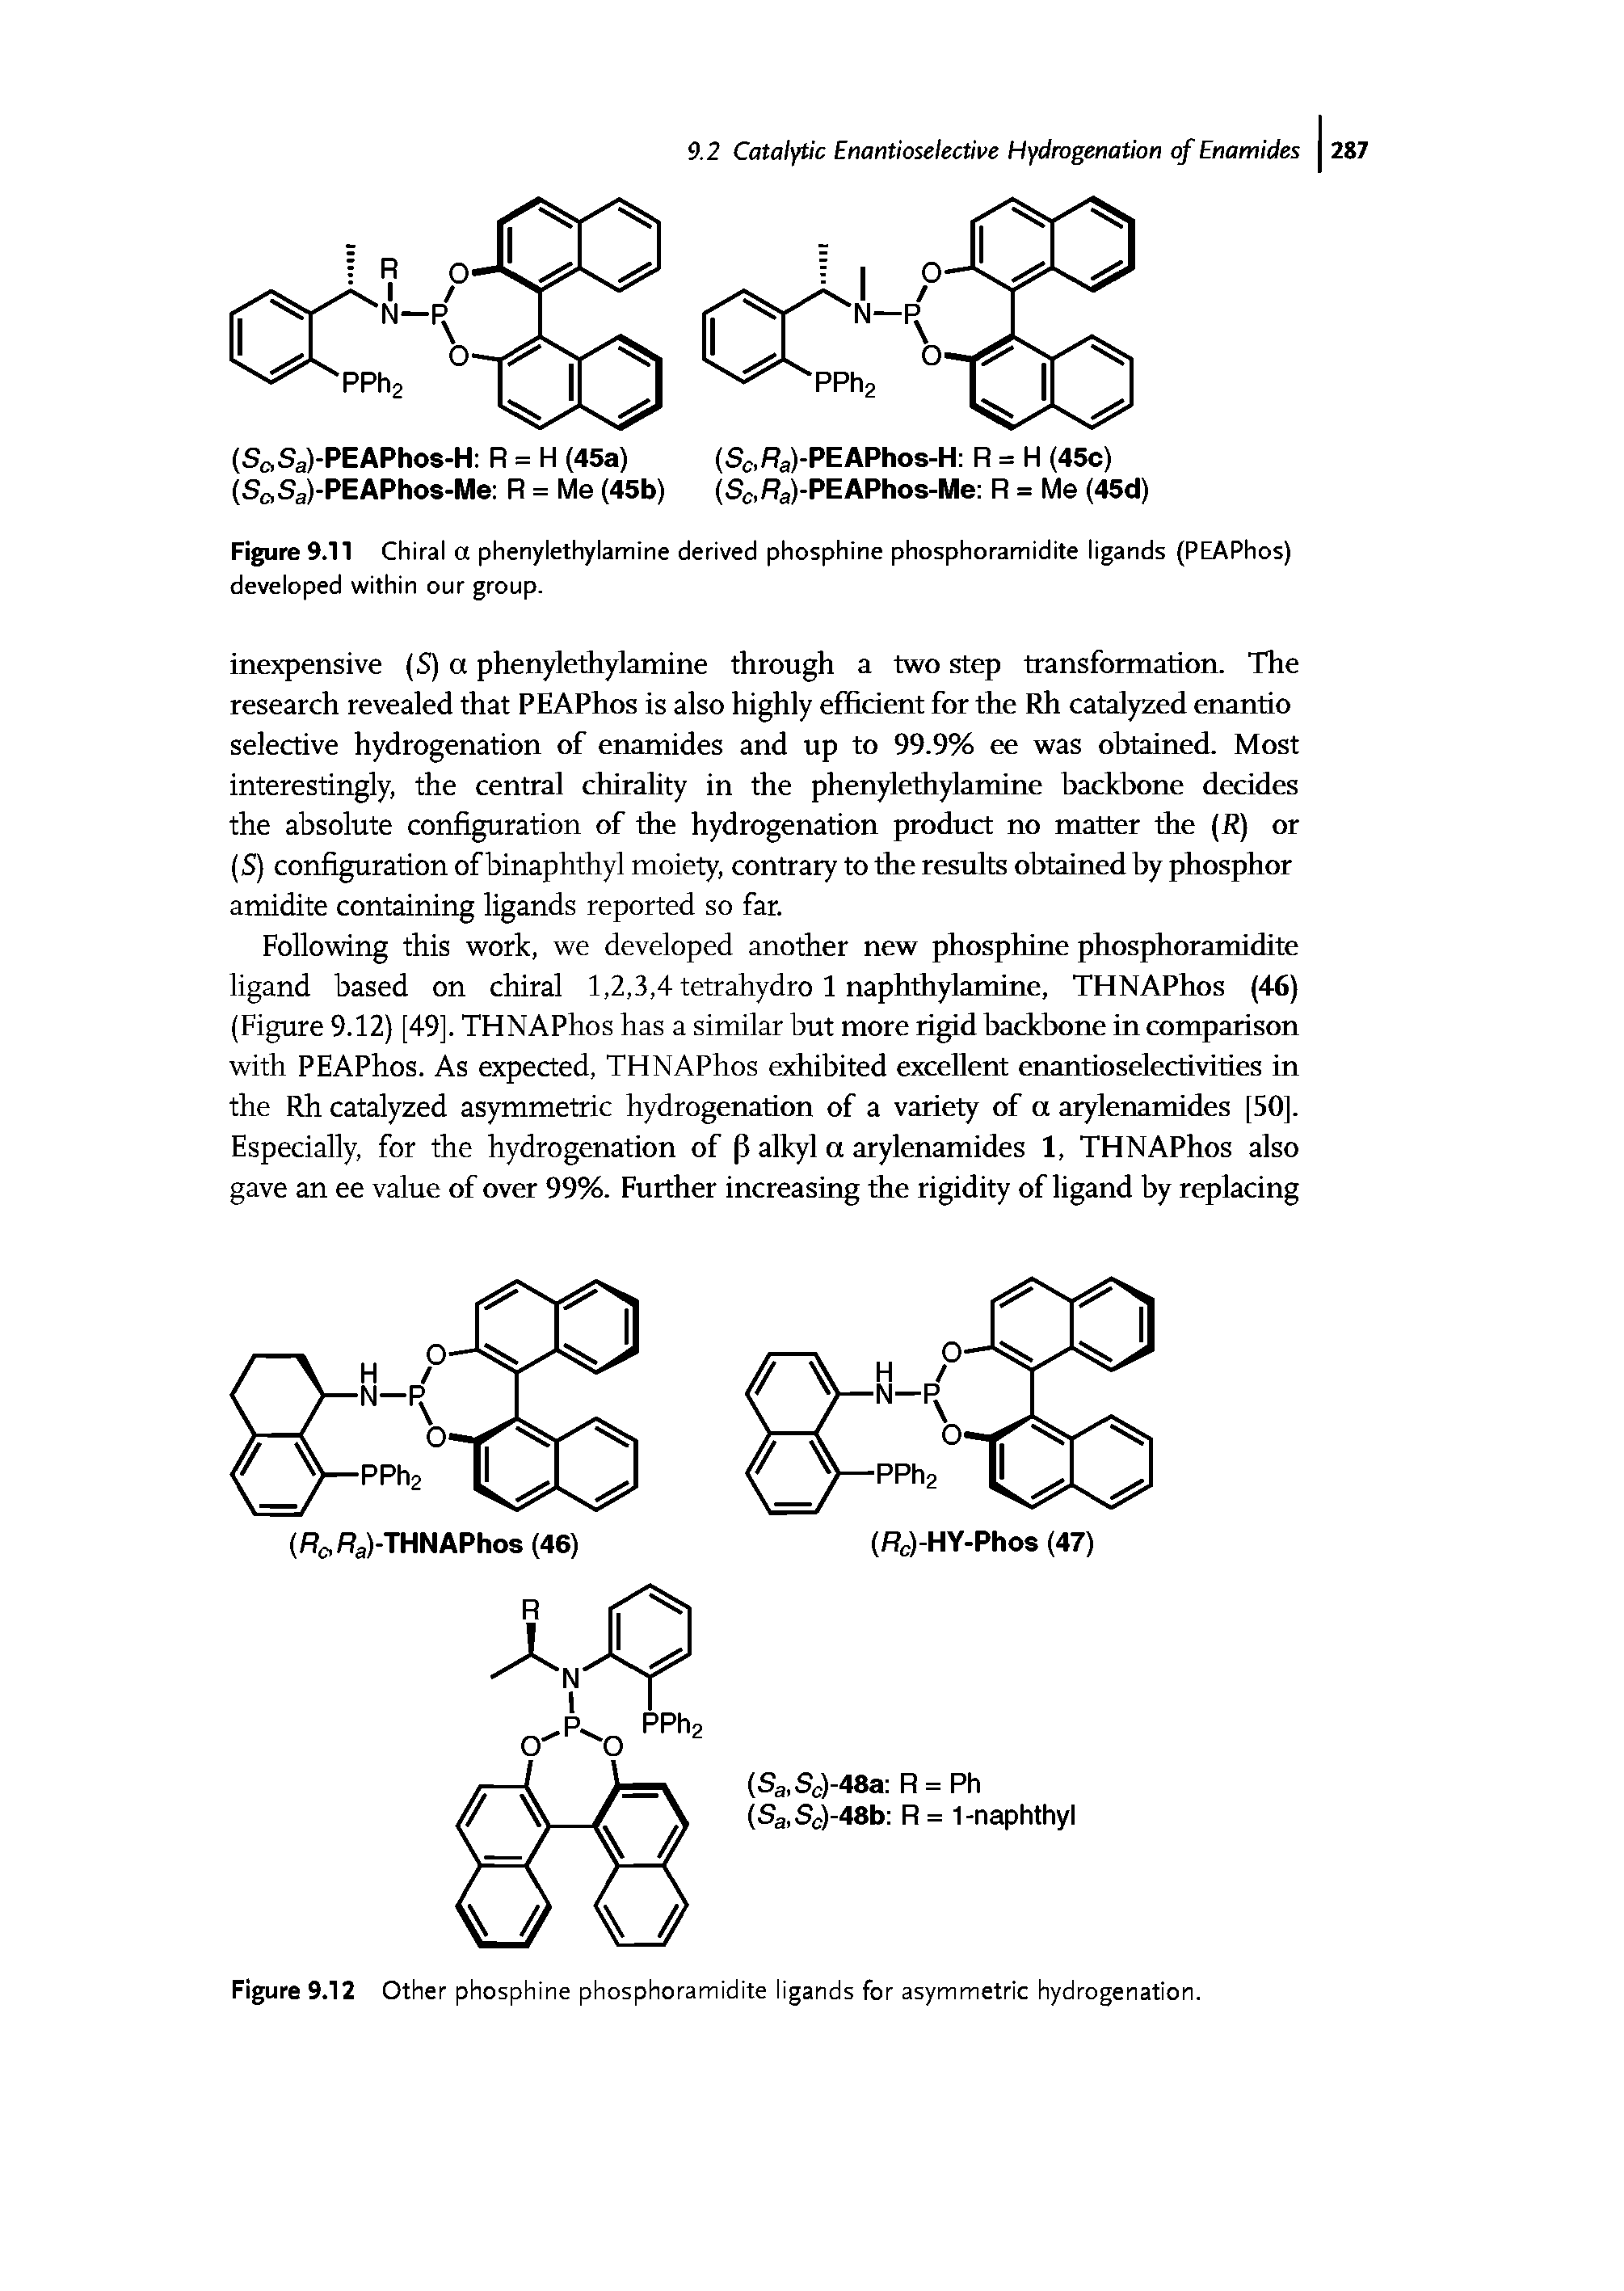 Figure 9.12 Other phosphine phosphoramidite ligands for asymmetric hydrogenation.